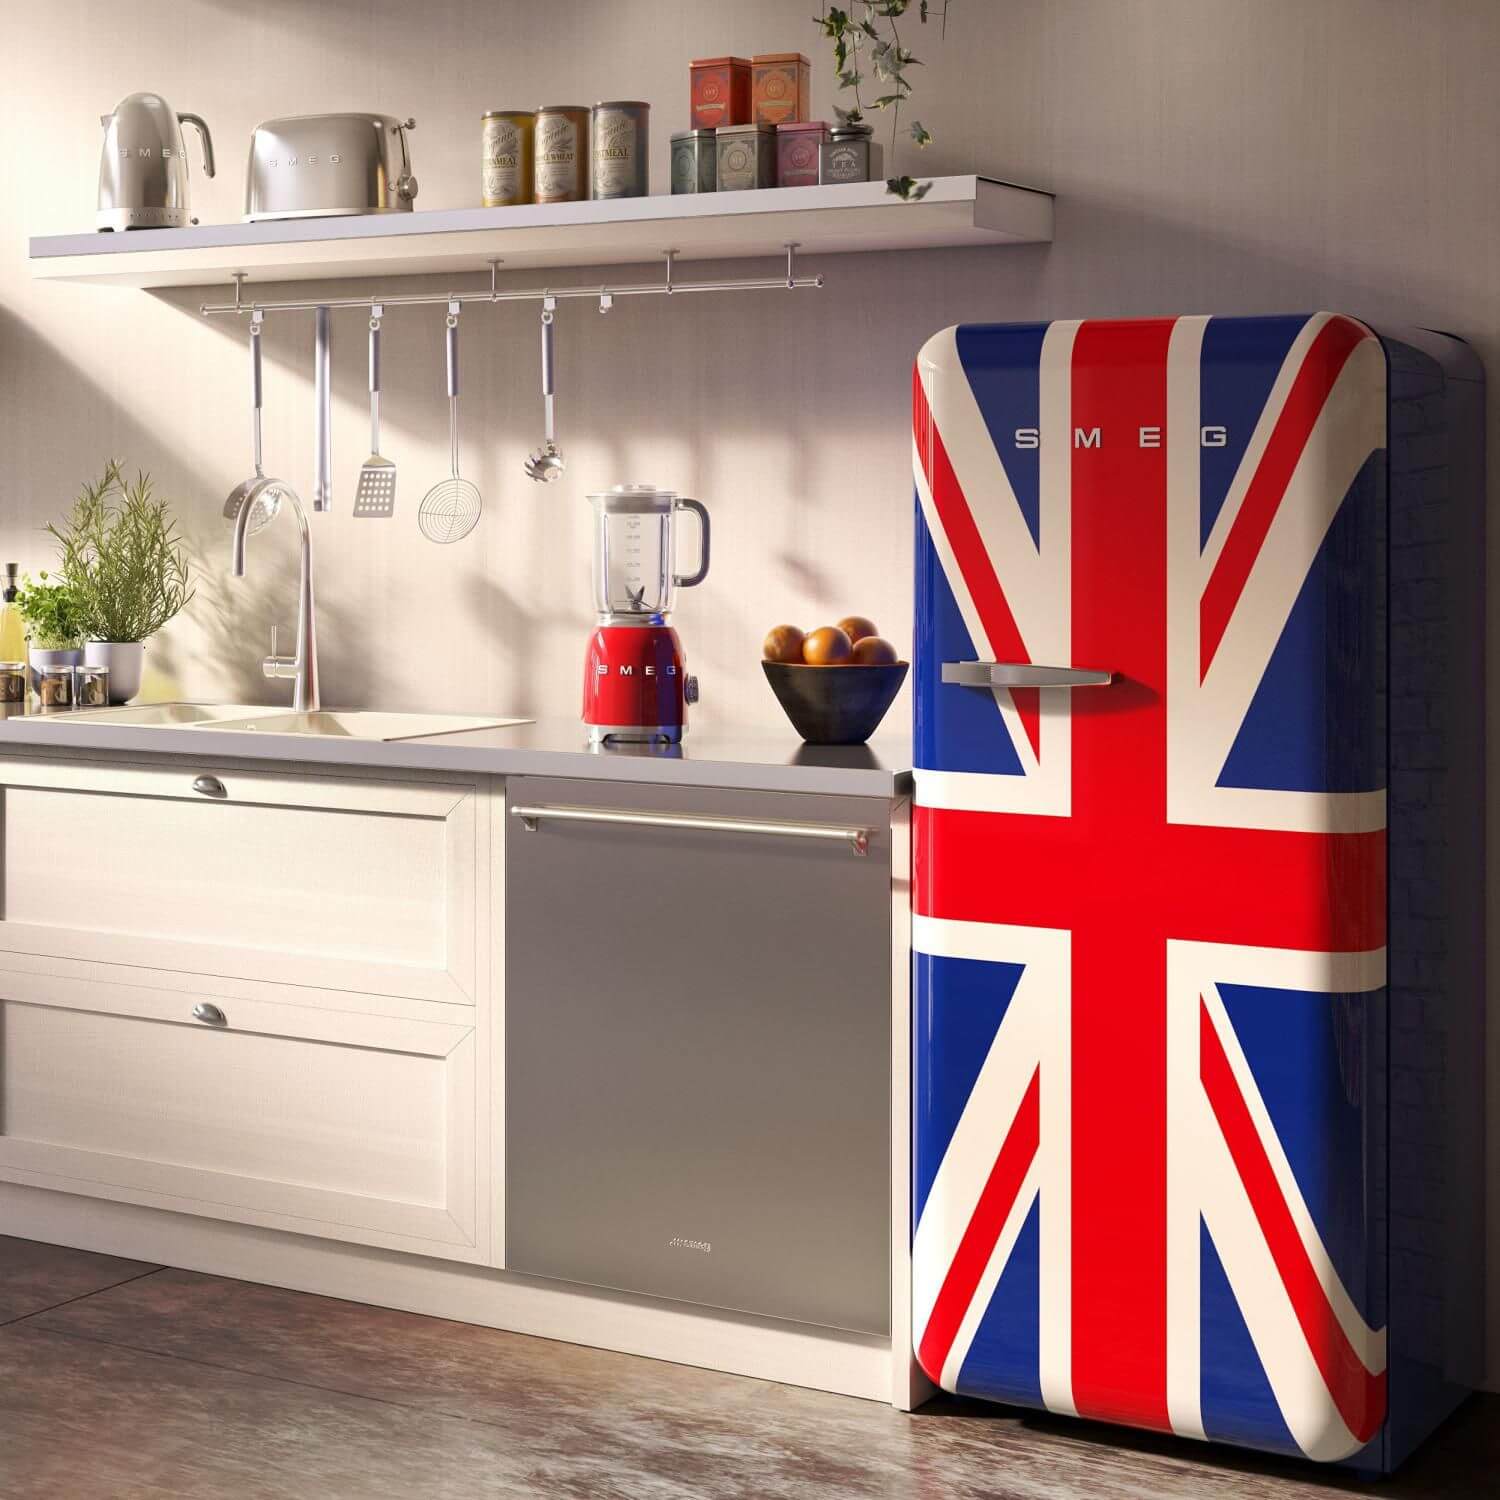 холодильник smeg британский флаг